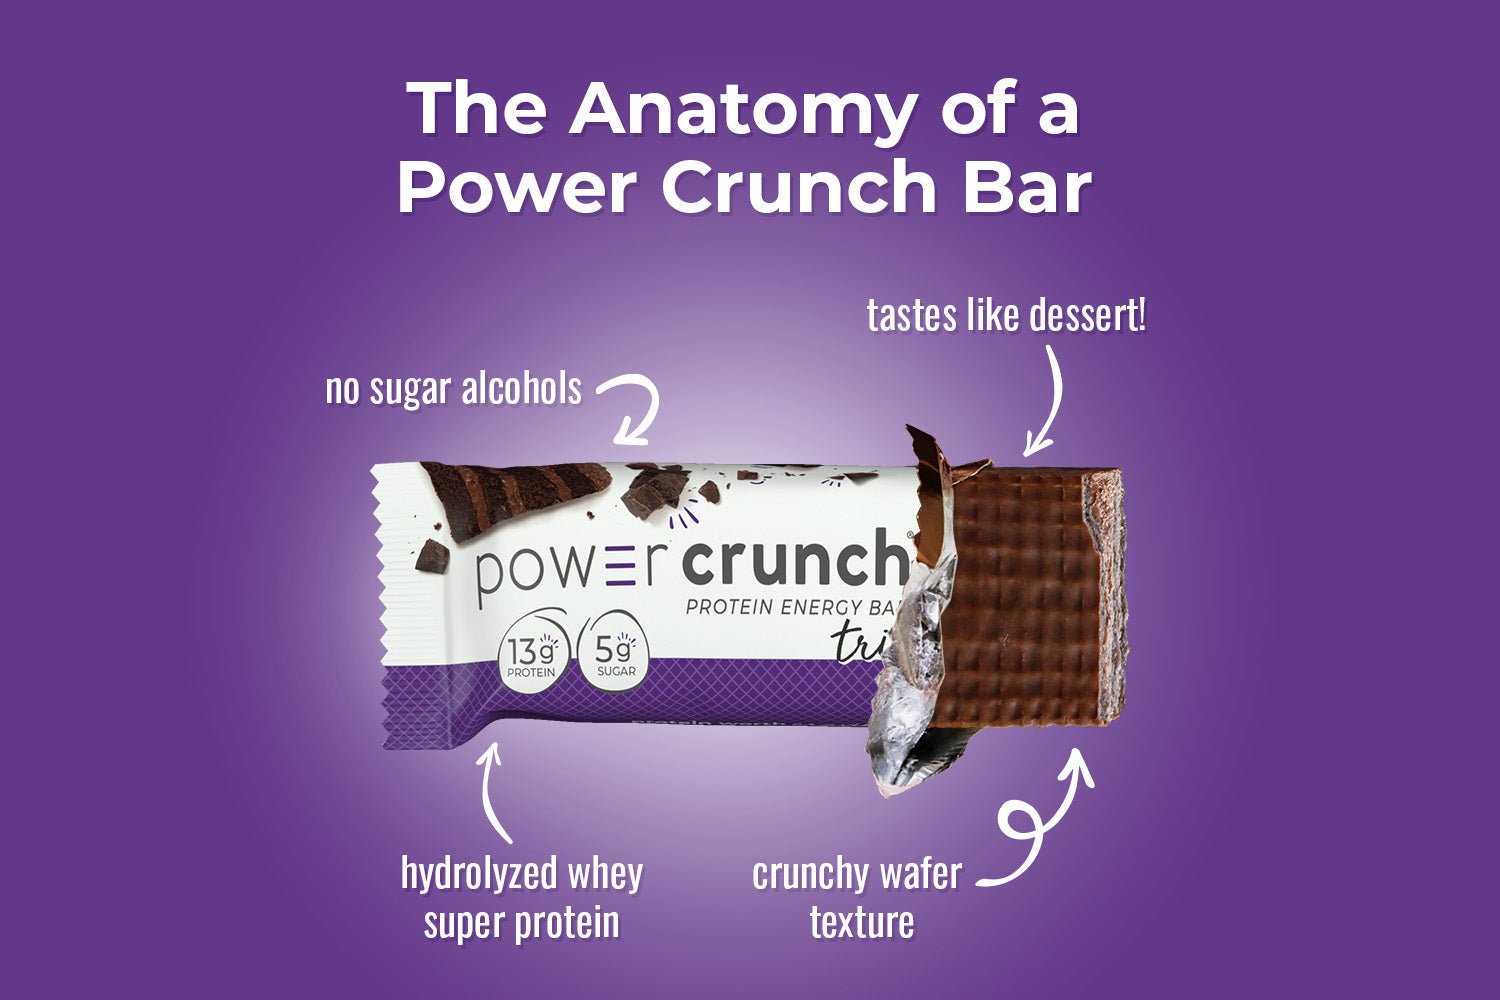 Triple Chocolate - Power CrunchPower Crunch Original